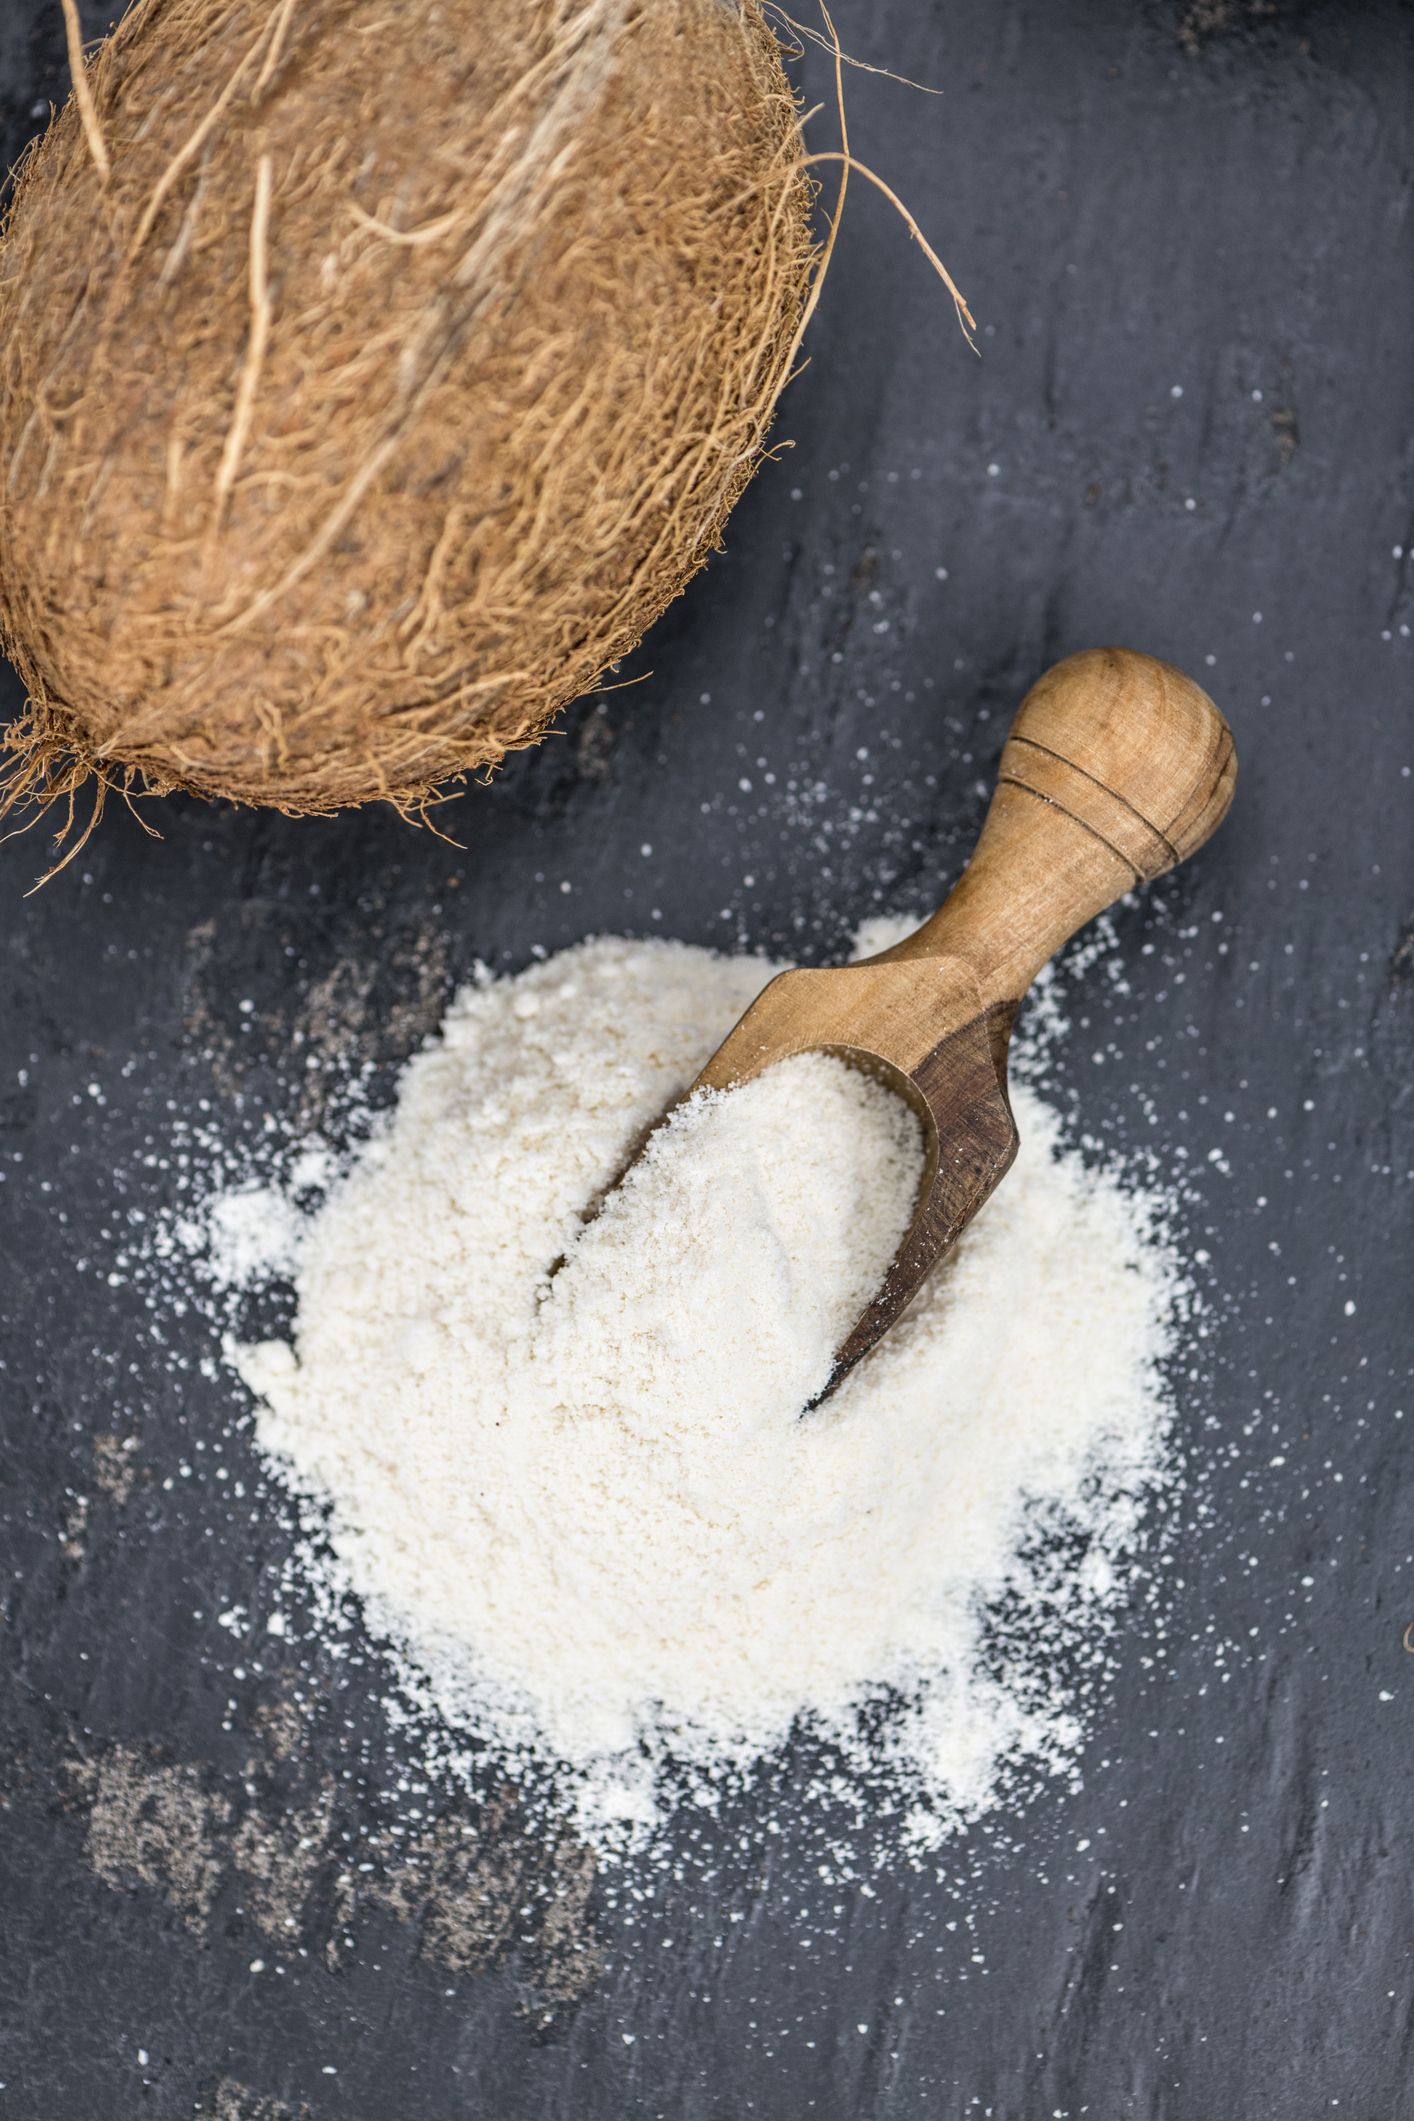 7 Substitutes for All-Purpose Flour - Escoffier